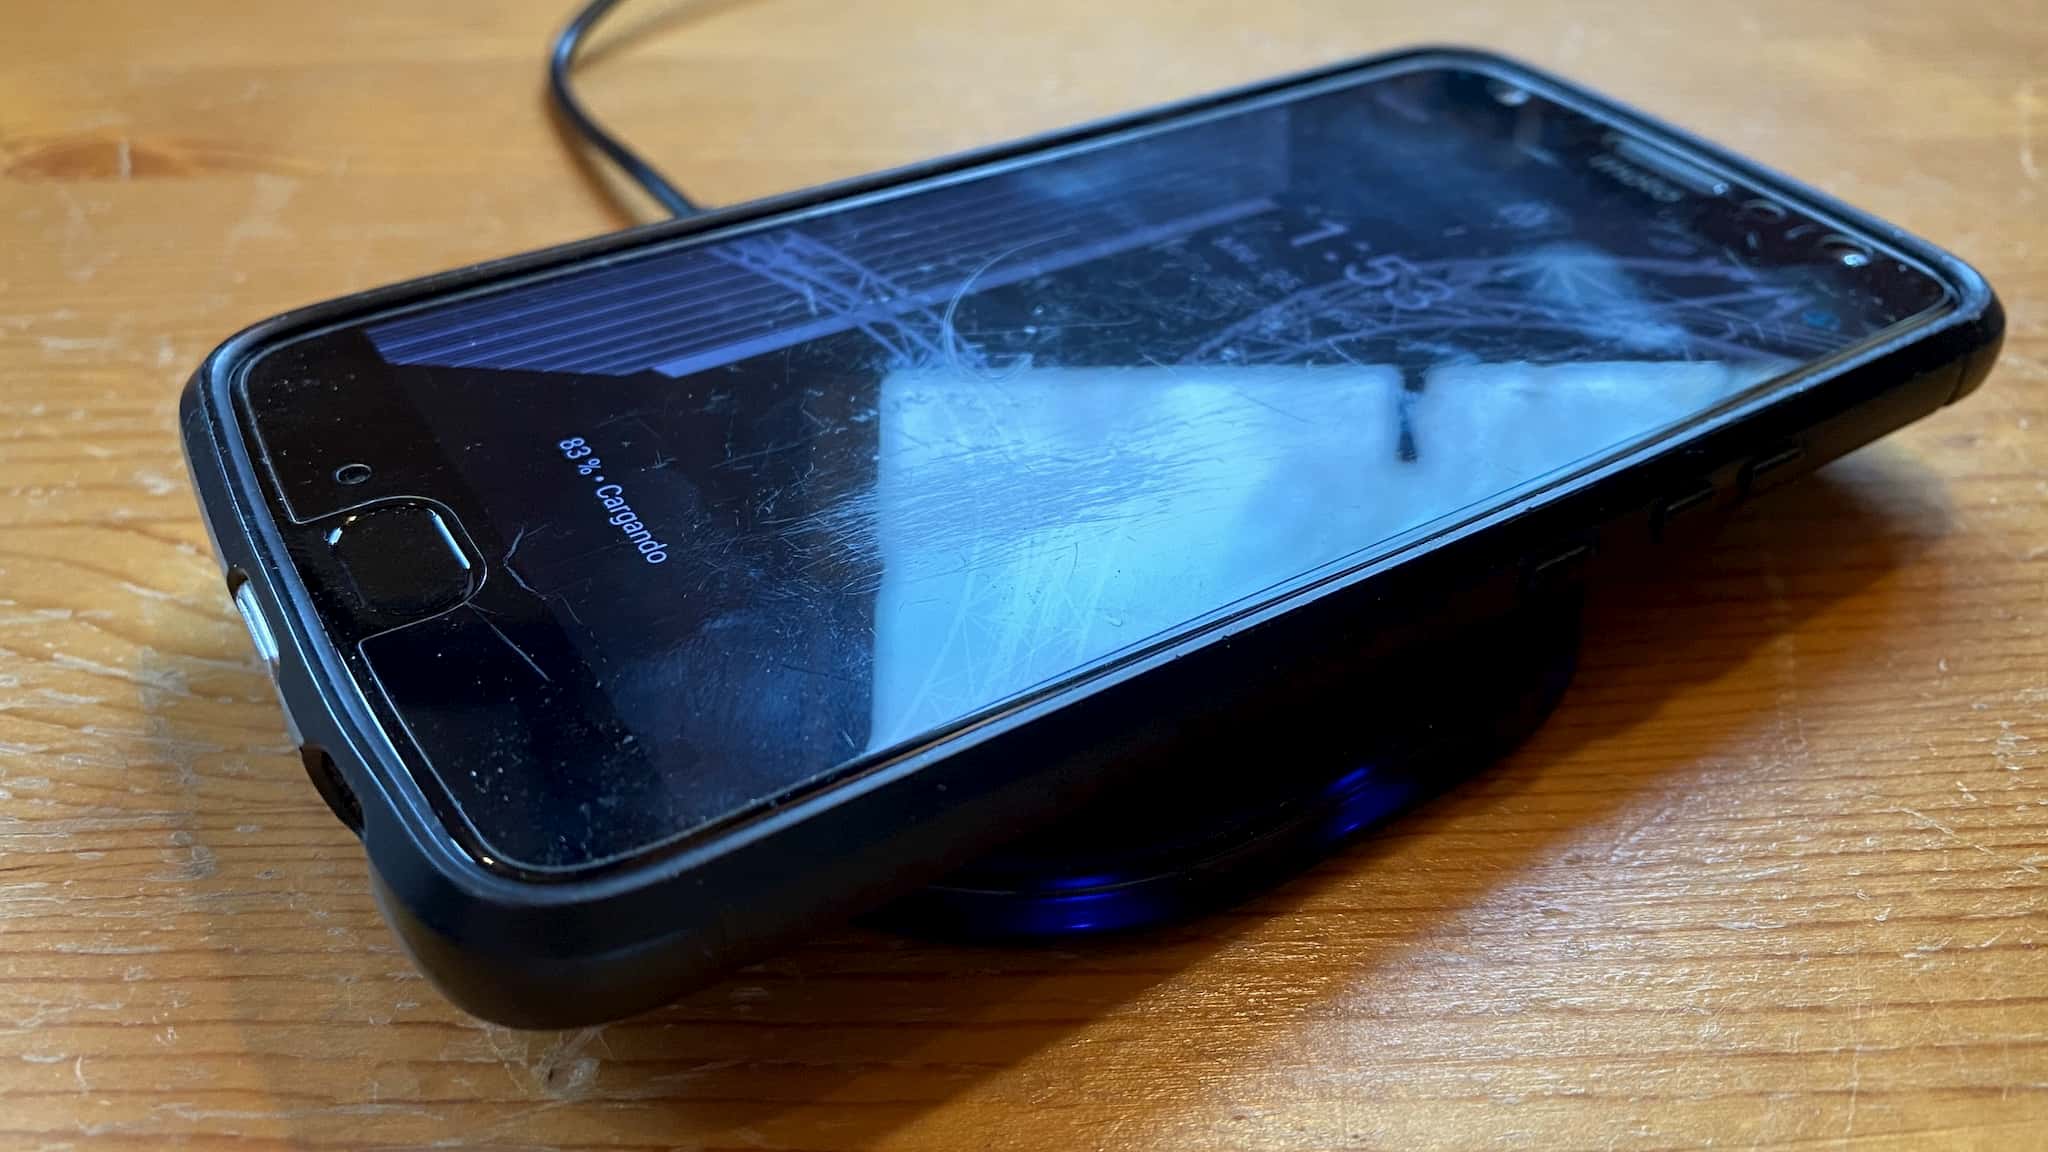 Phone sitting on wireless charging pad